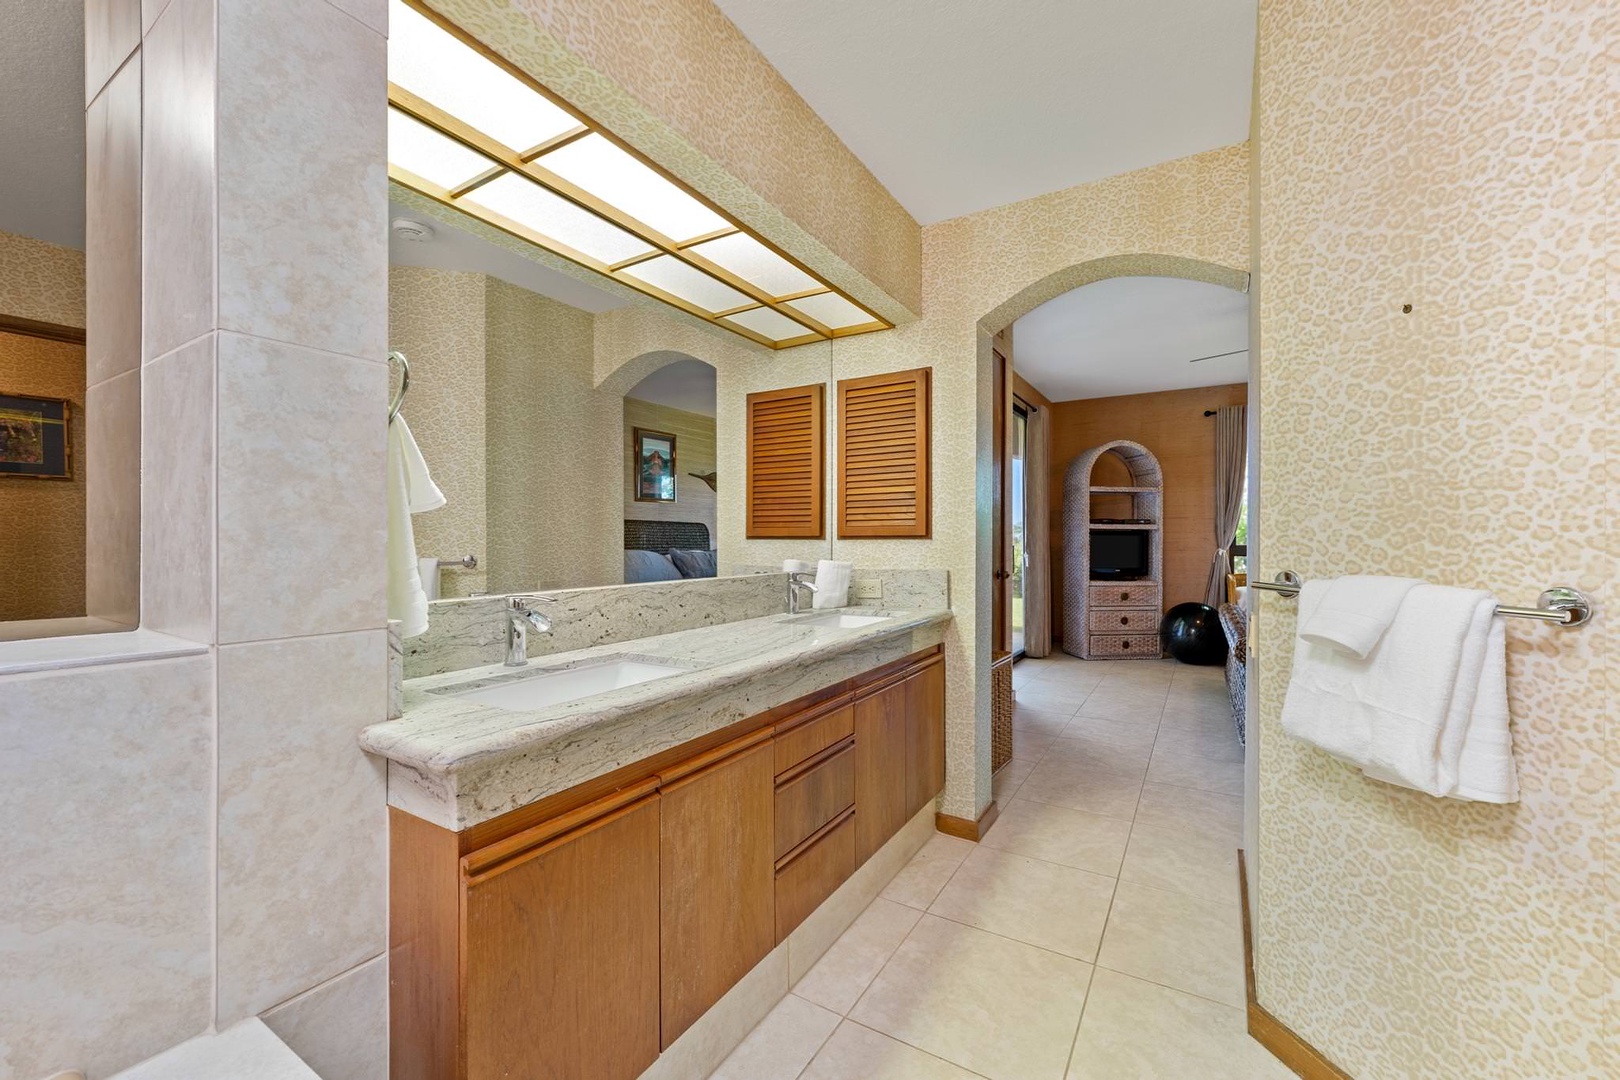 En suite bathroom with soaking tub, standing shower, and dual sinks